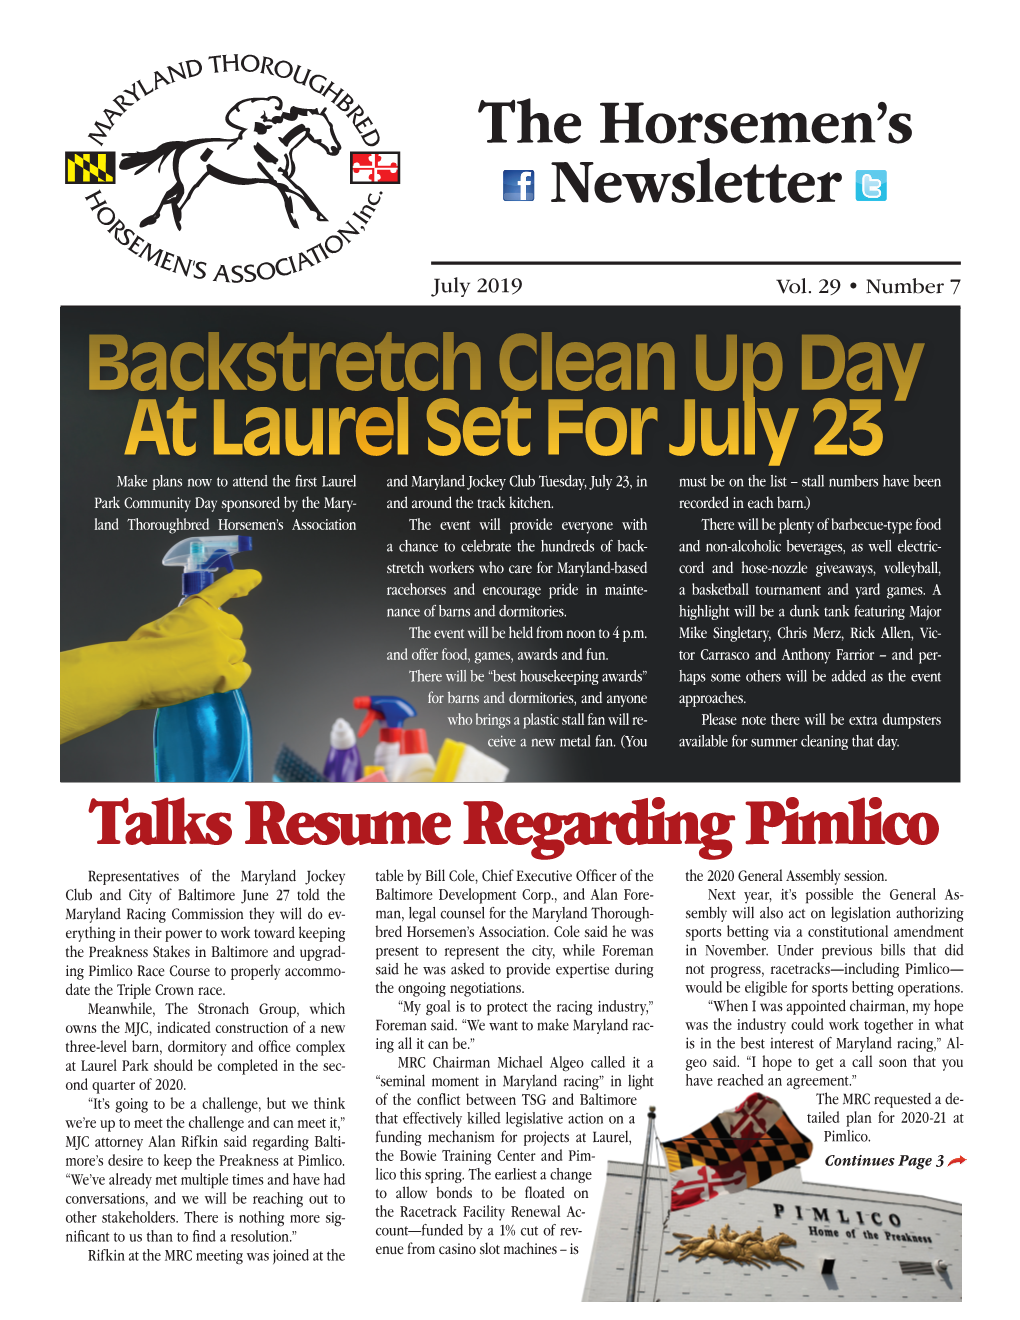 Backstretch Clean up Day at Laurel Set for July 23